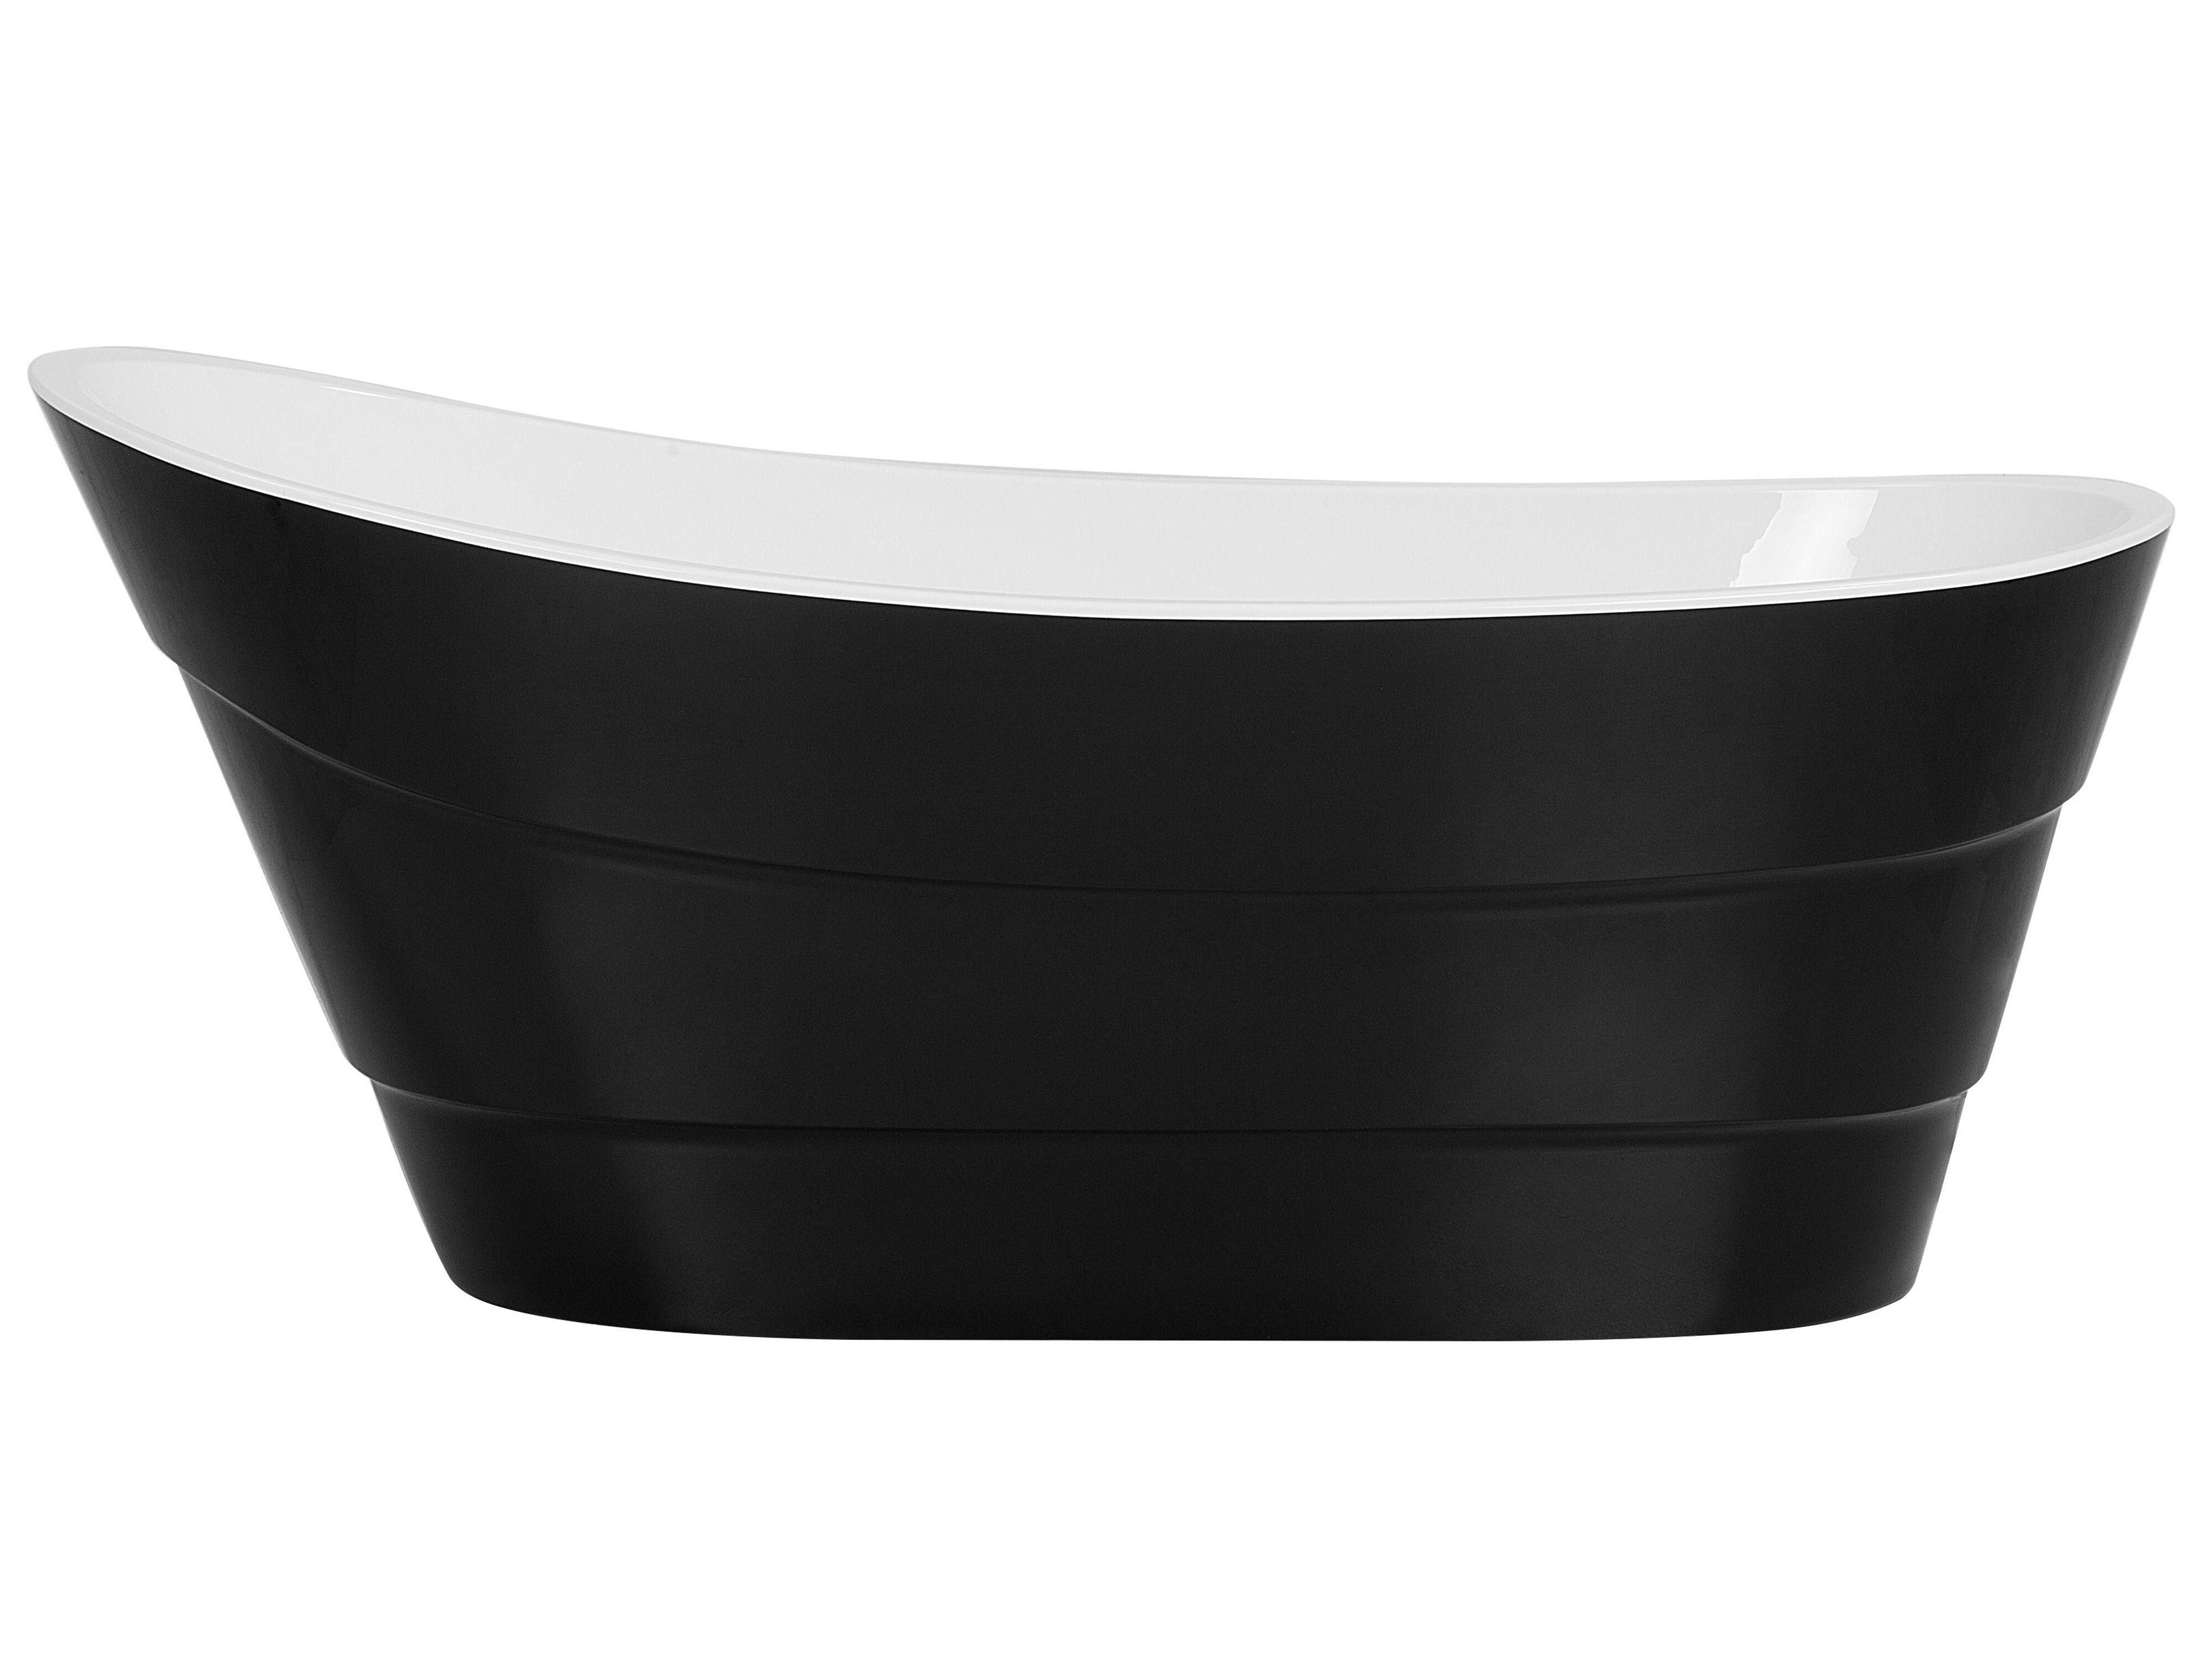 Badewanne freistehend schwarz oval 170 x 73 cm BUENAVISTA | Badetücher